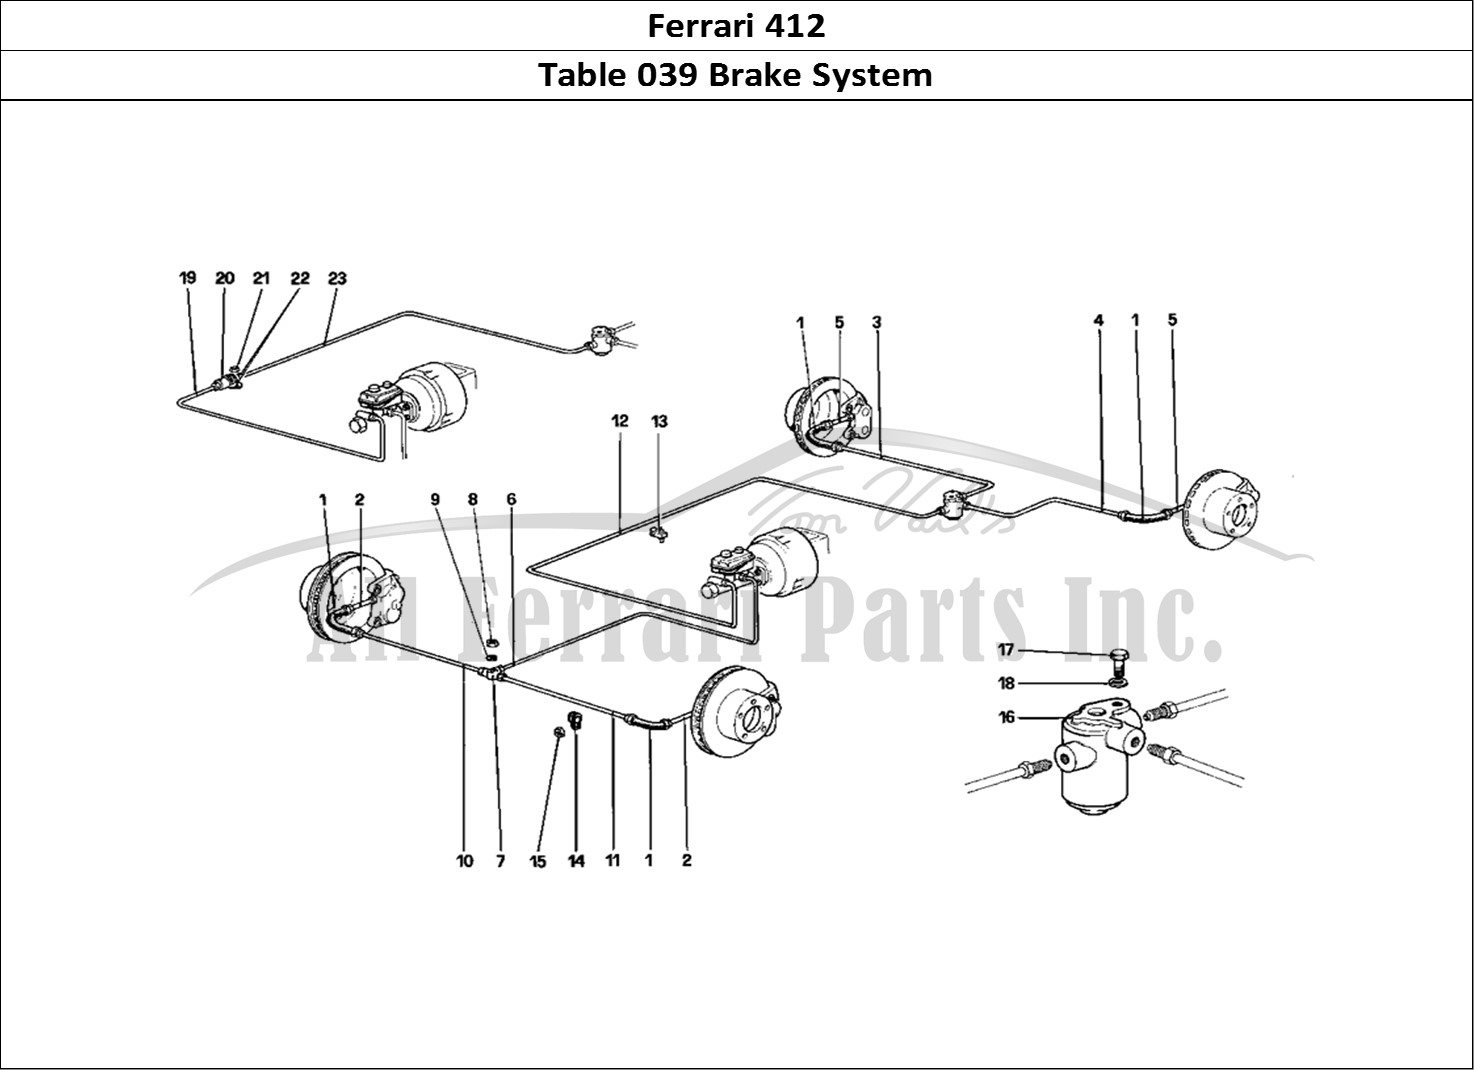 Ferrari Parts Ferrari 412 (Mechanical) Page 039 Brakes System